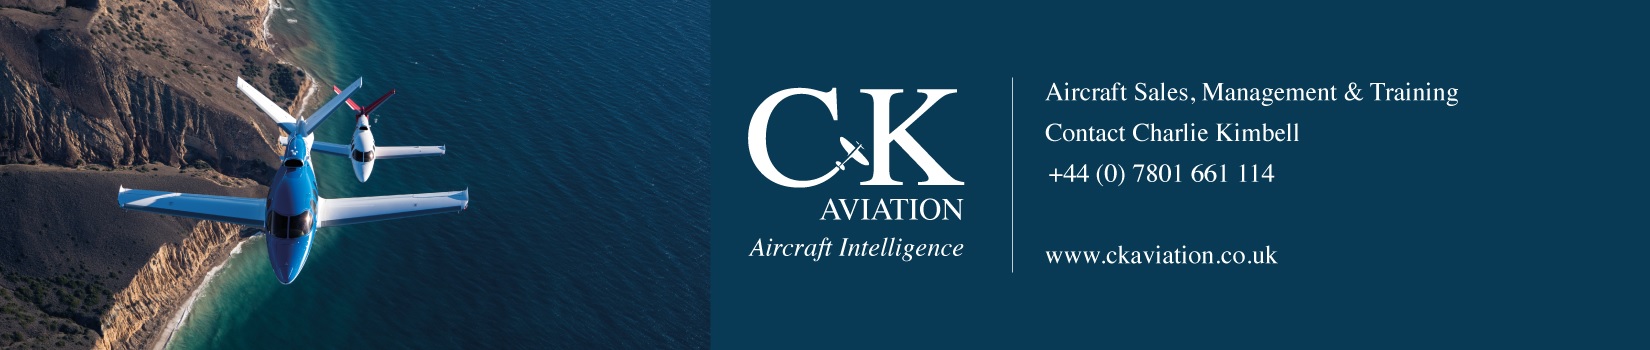 CK Aviation Services Ltd